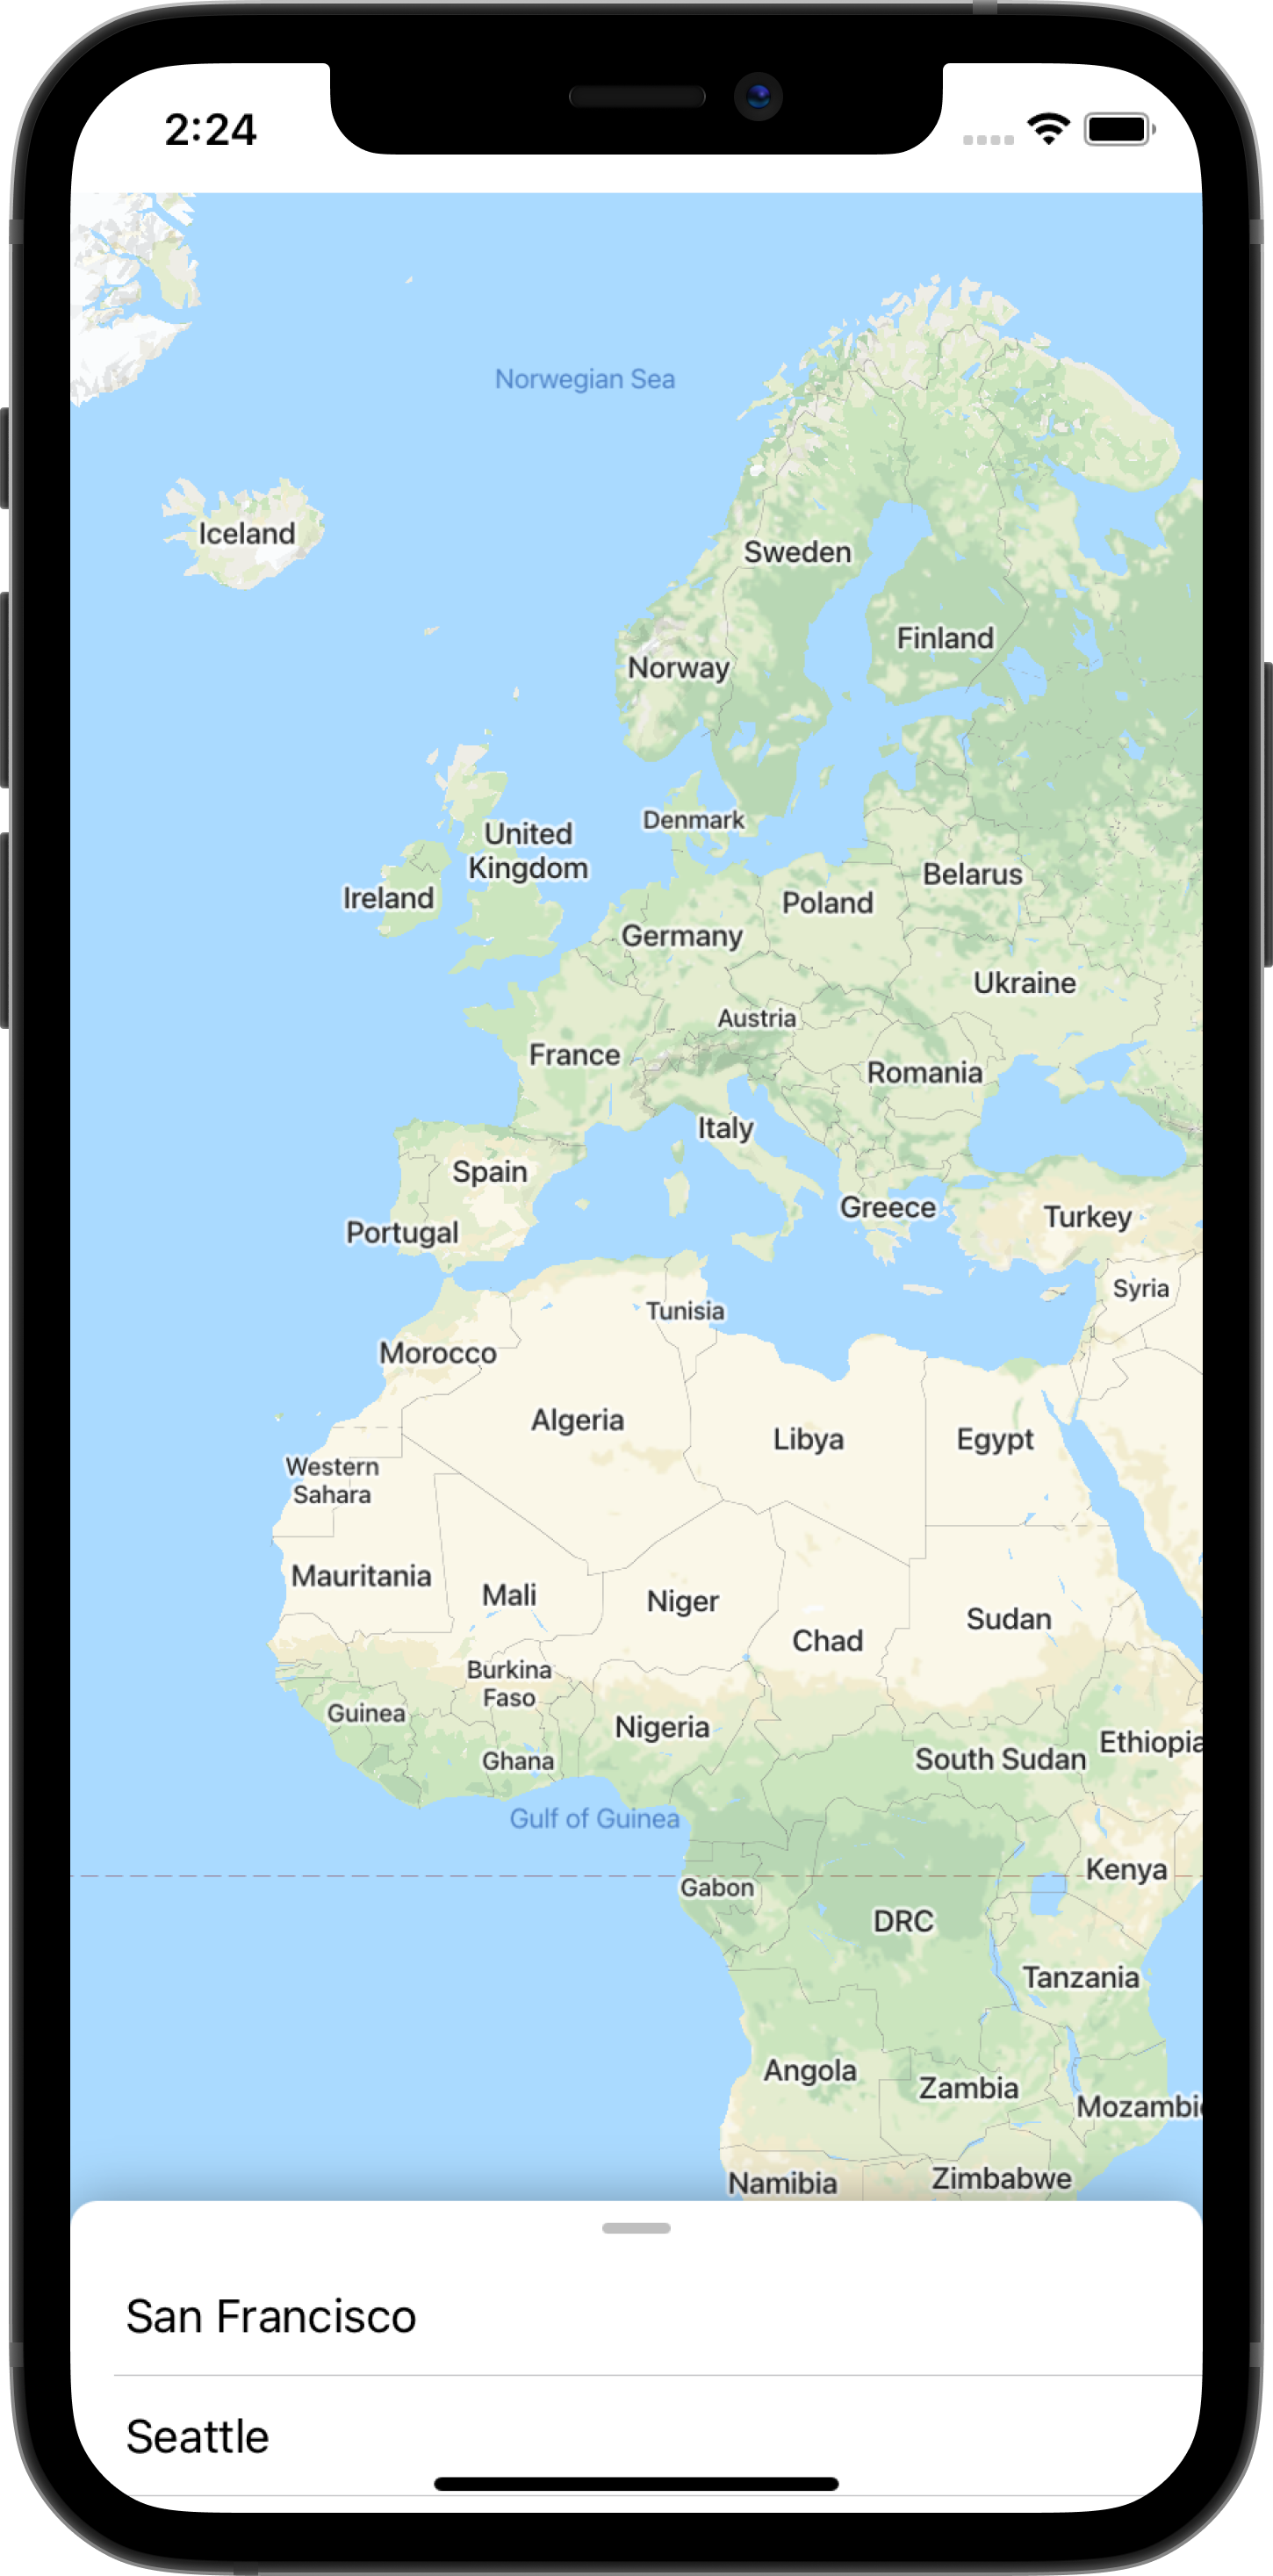 add-a-map- Screenshot@2x.png